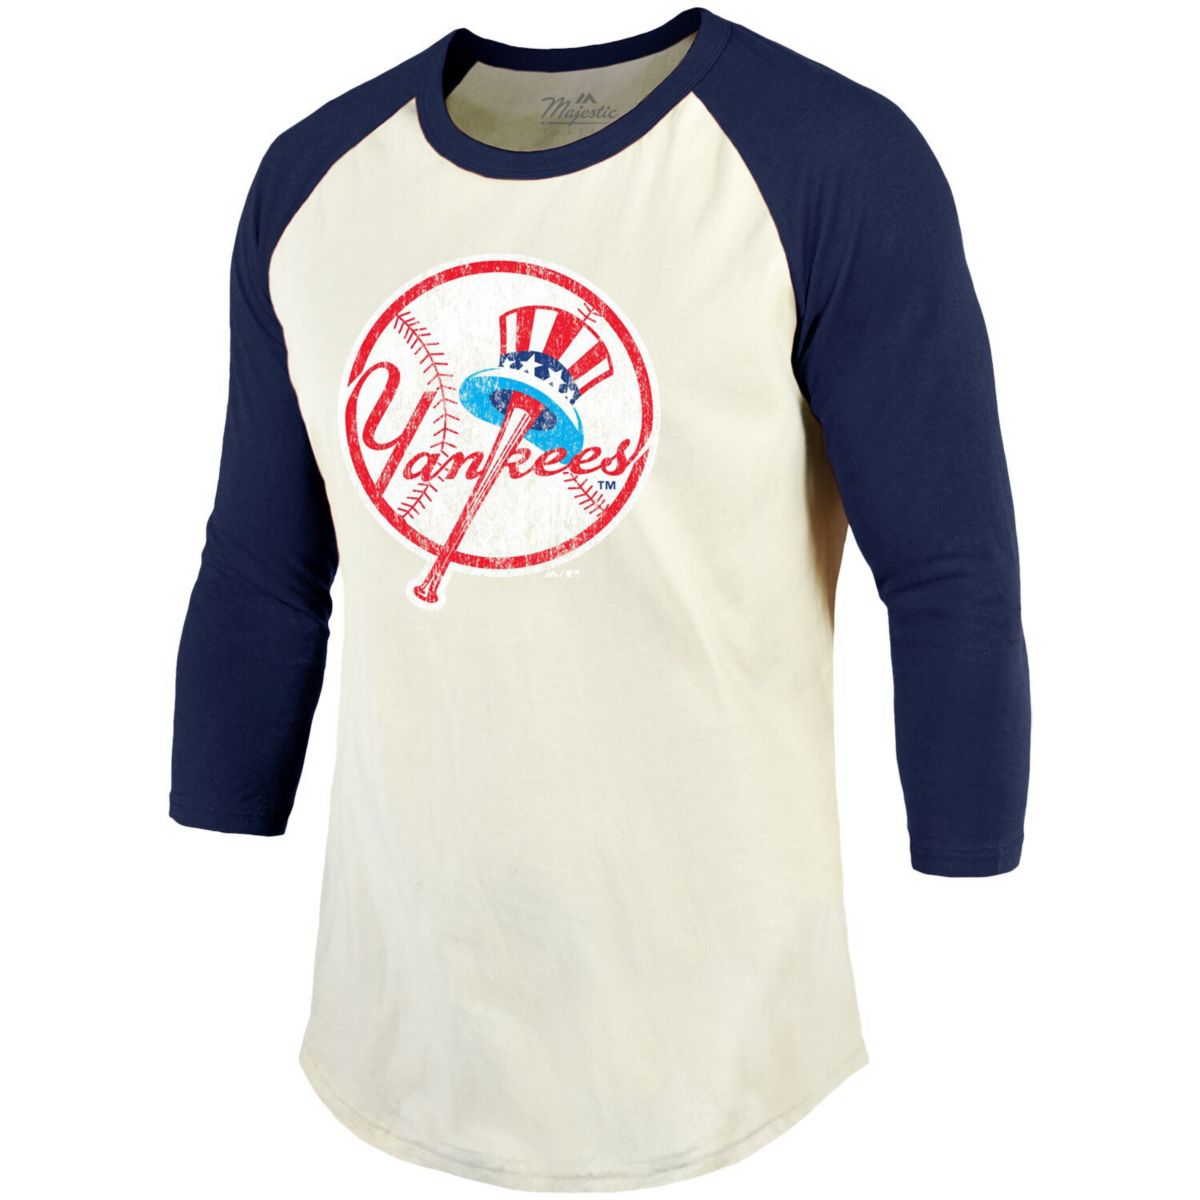 Мужская футболка Majestic Threads кремового / темно-синего цвета из коллекции New York Yankees Cooperstown, реглан с рукавами 3/4 Majestic